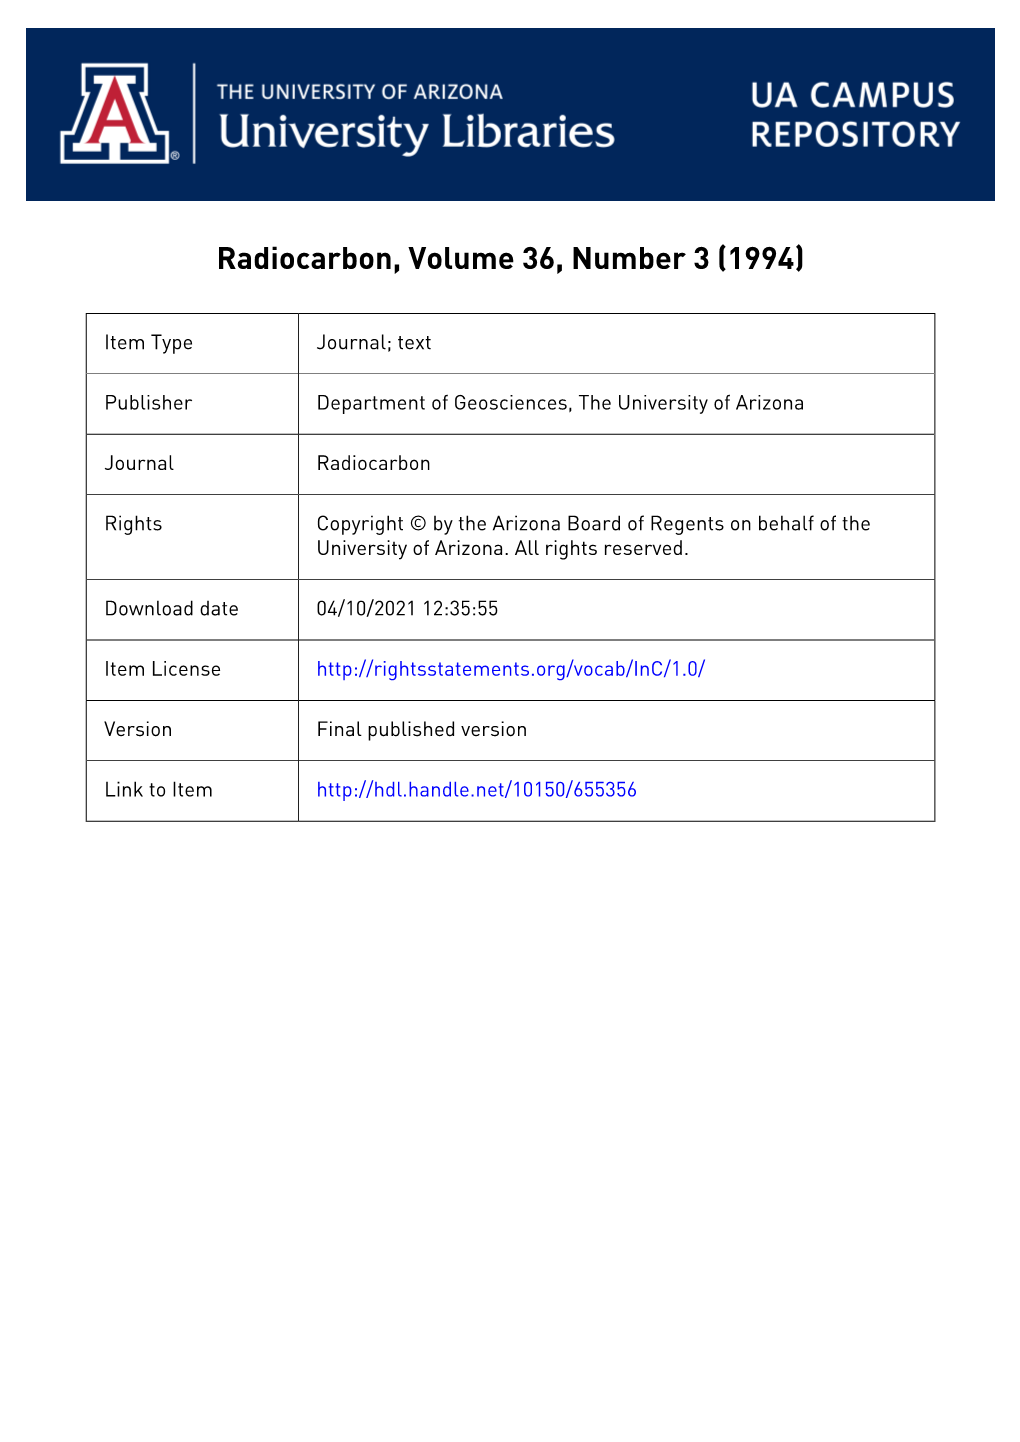 Radiocarbon, Volume 36, Number 3 (1994)